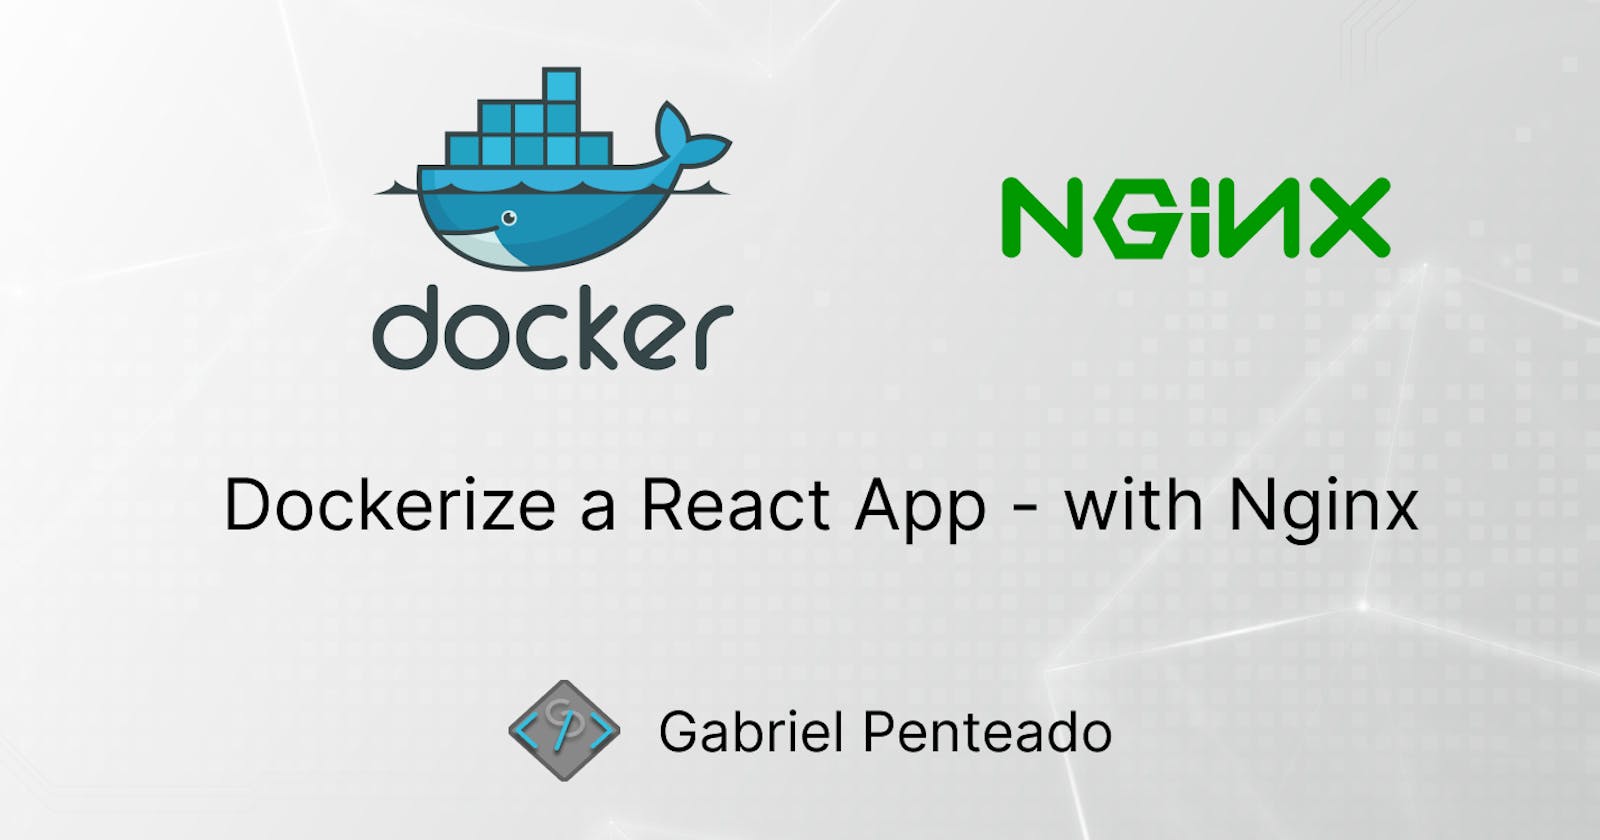 Dockerize a React App - with Nginx